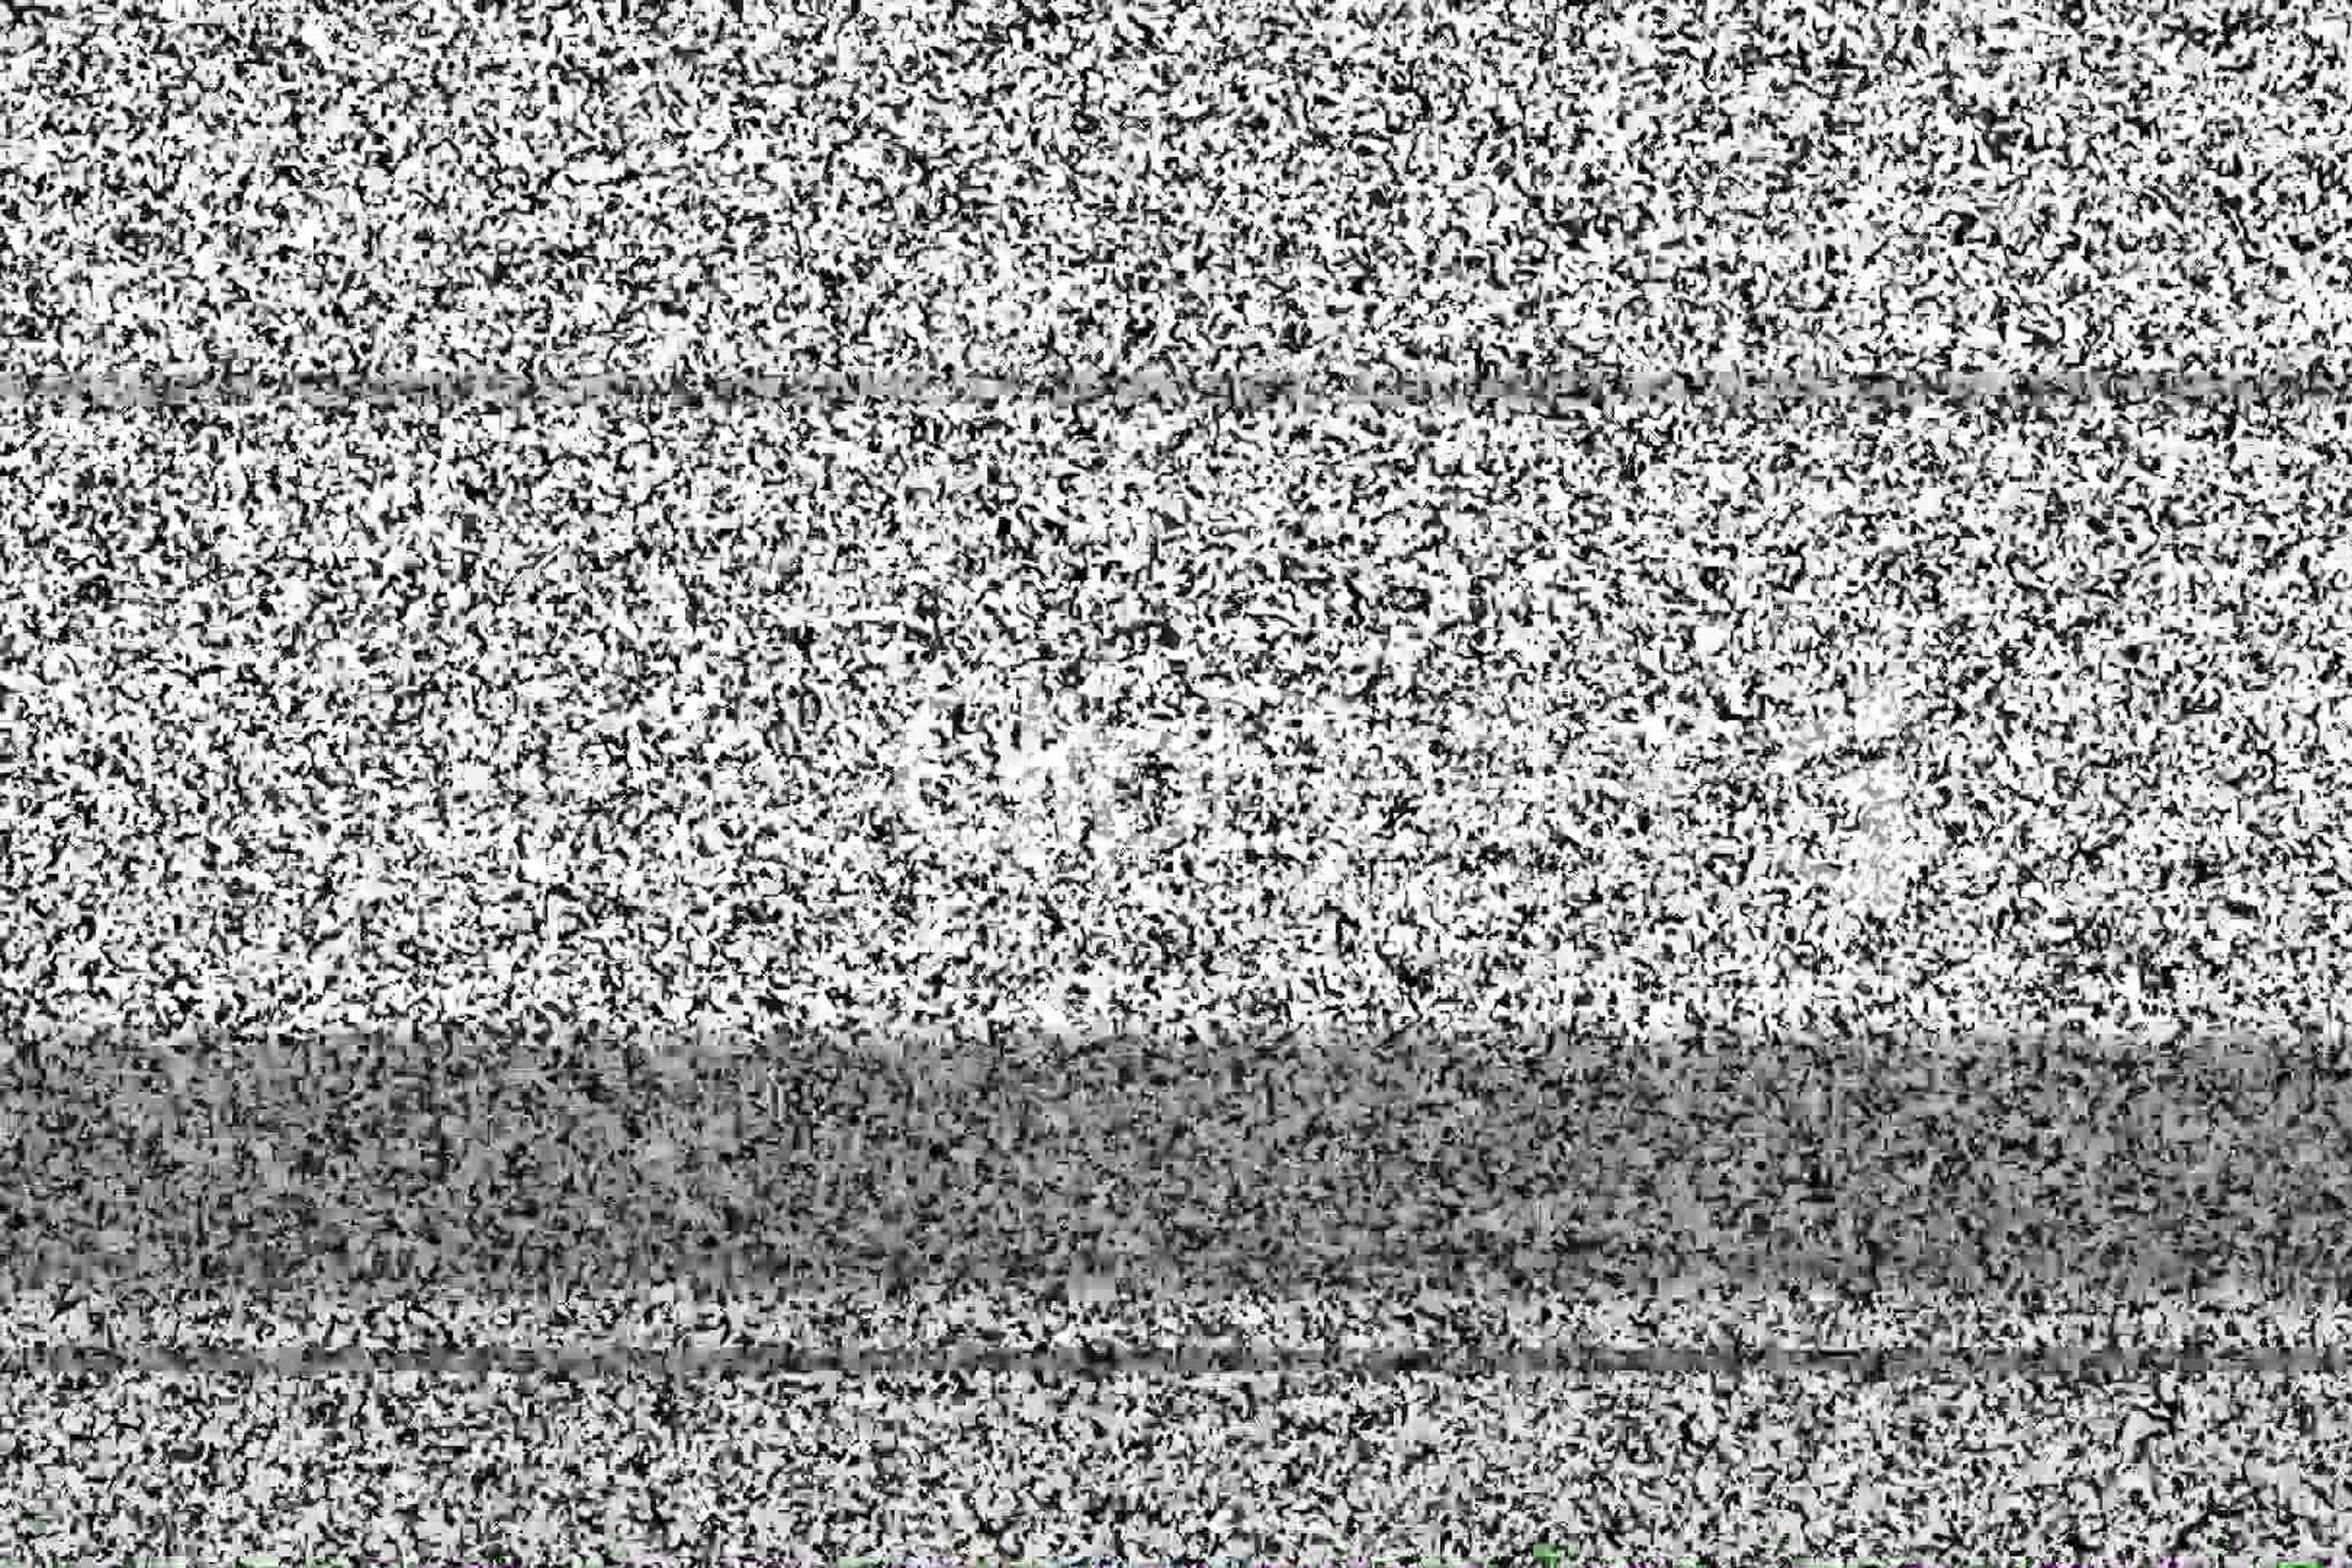 Старые помехи. Помехи на телевизоре. Белый шум телевизора. Серый экран телевизора. Помехи черно белые.